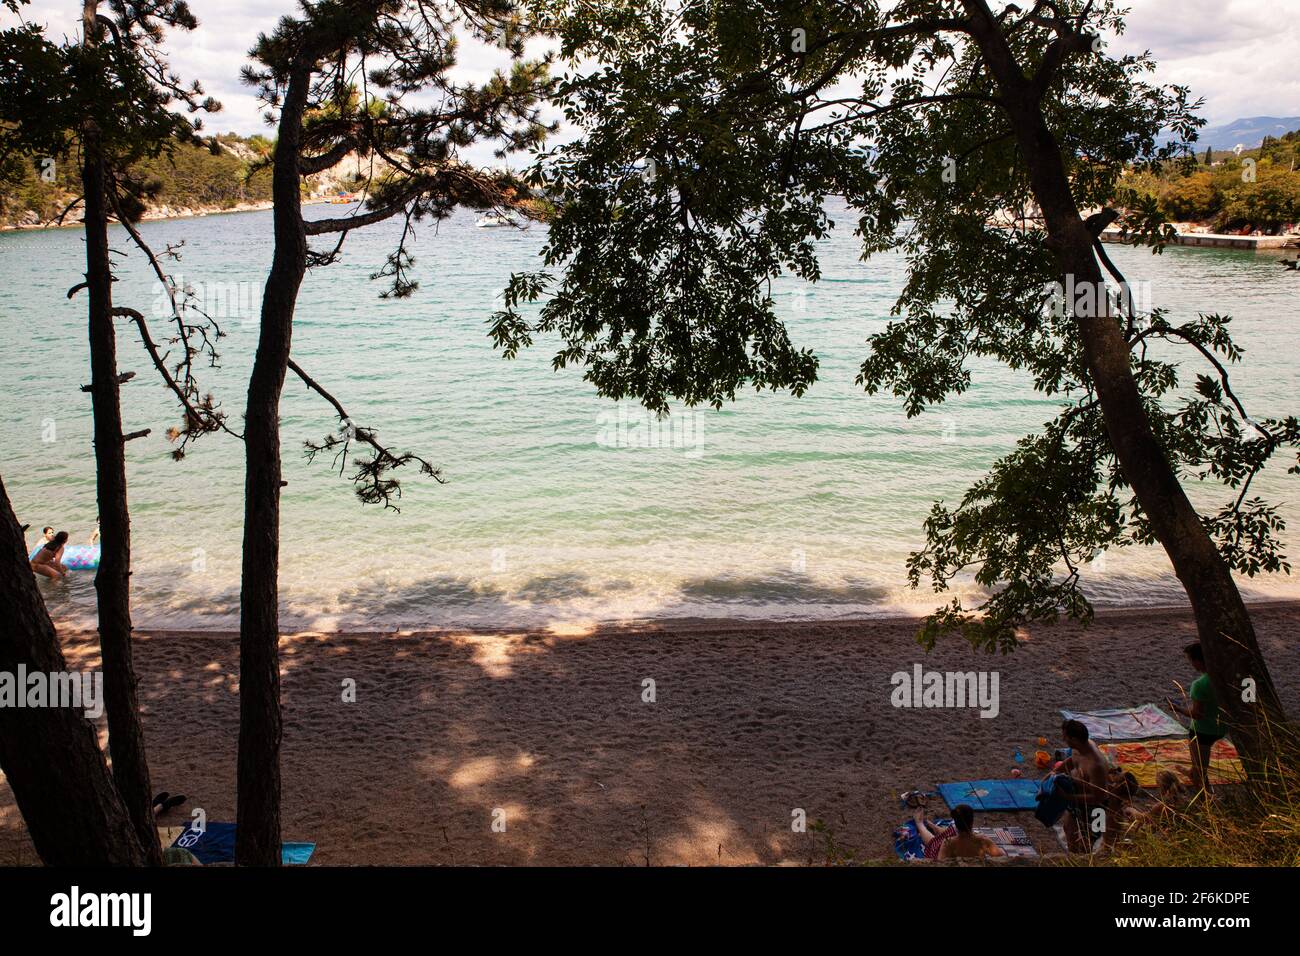 Omišalj, Krk Island, Croatia - July, 18: People tanning in the Omišalj beach in the summer season on July 18, 2020 Stock Photo